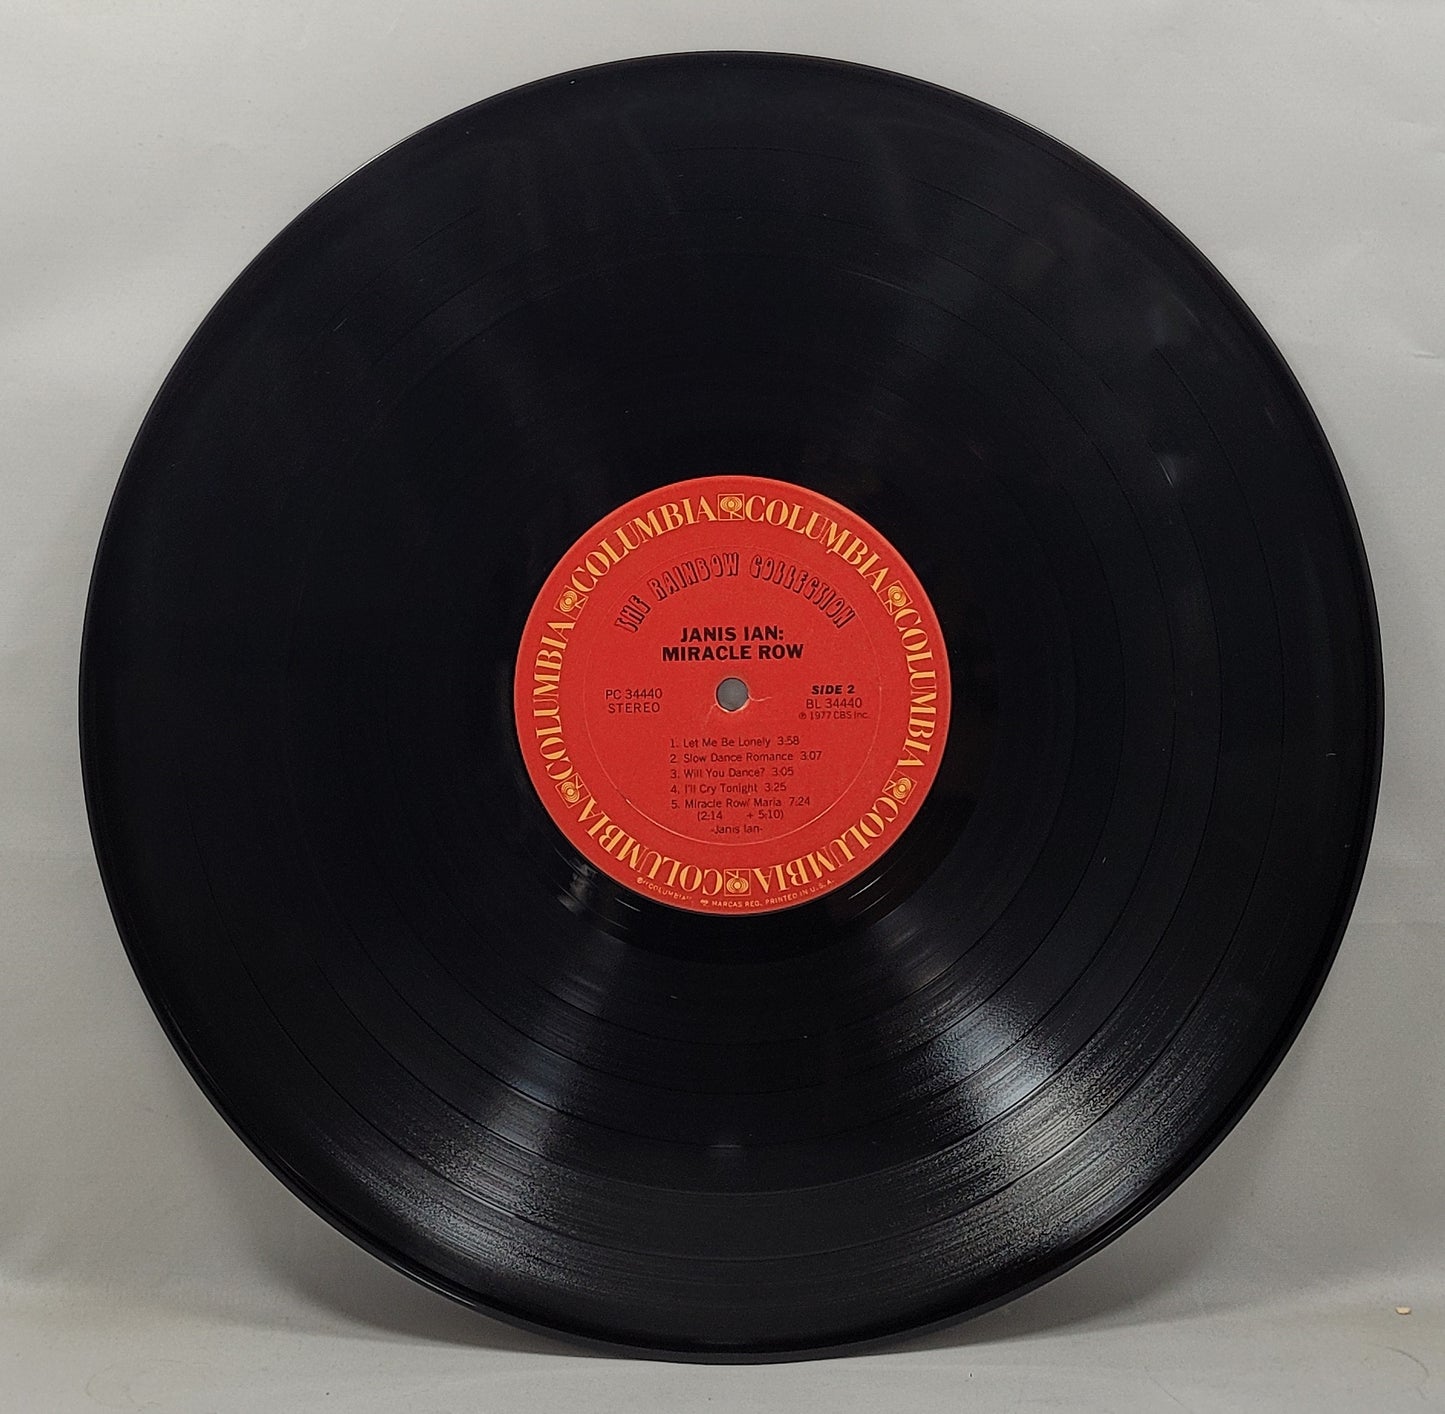 Janis Ian - Miracle Row [1977 Gatefold] [Used Vinyl Record LP] [C]